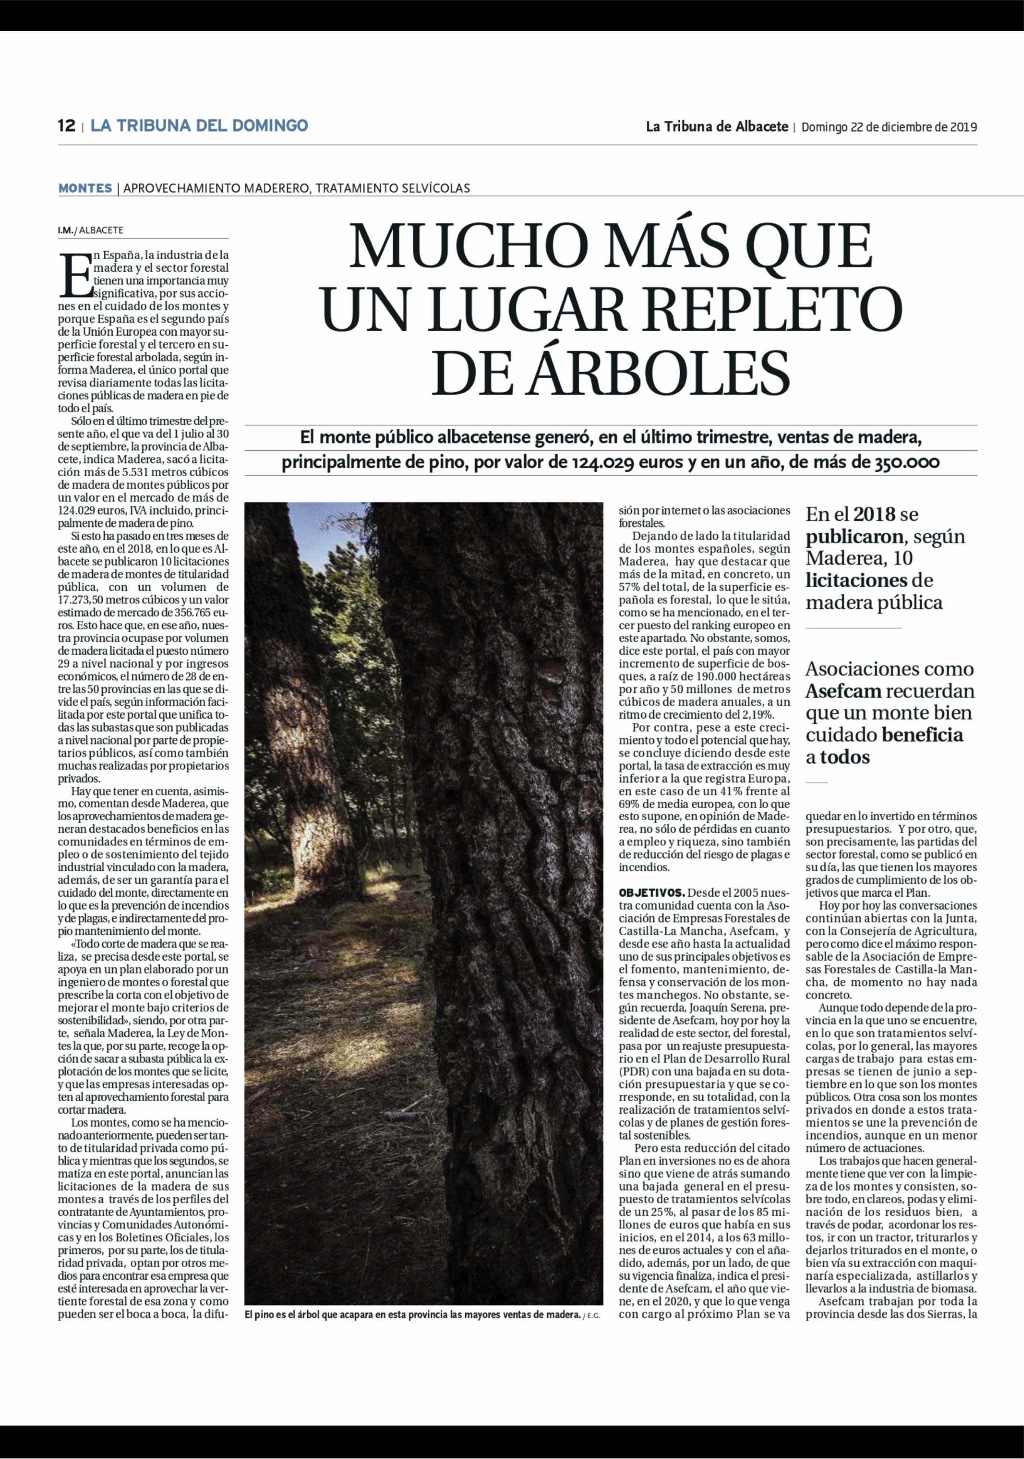 Subastas madera noticia Albacete